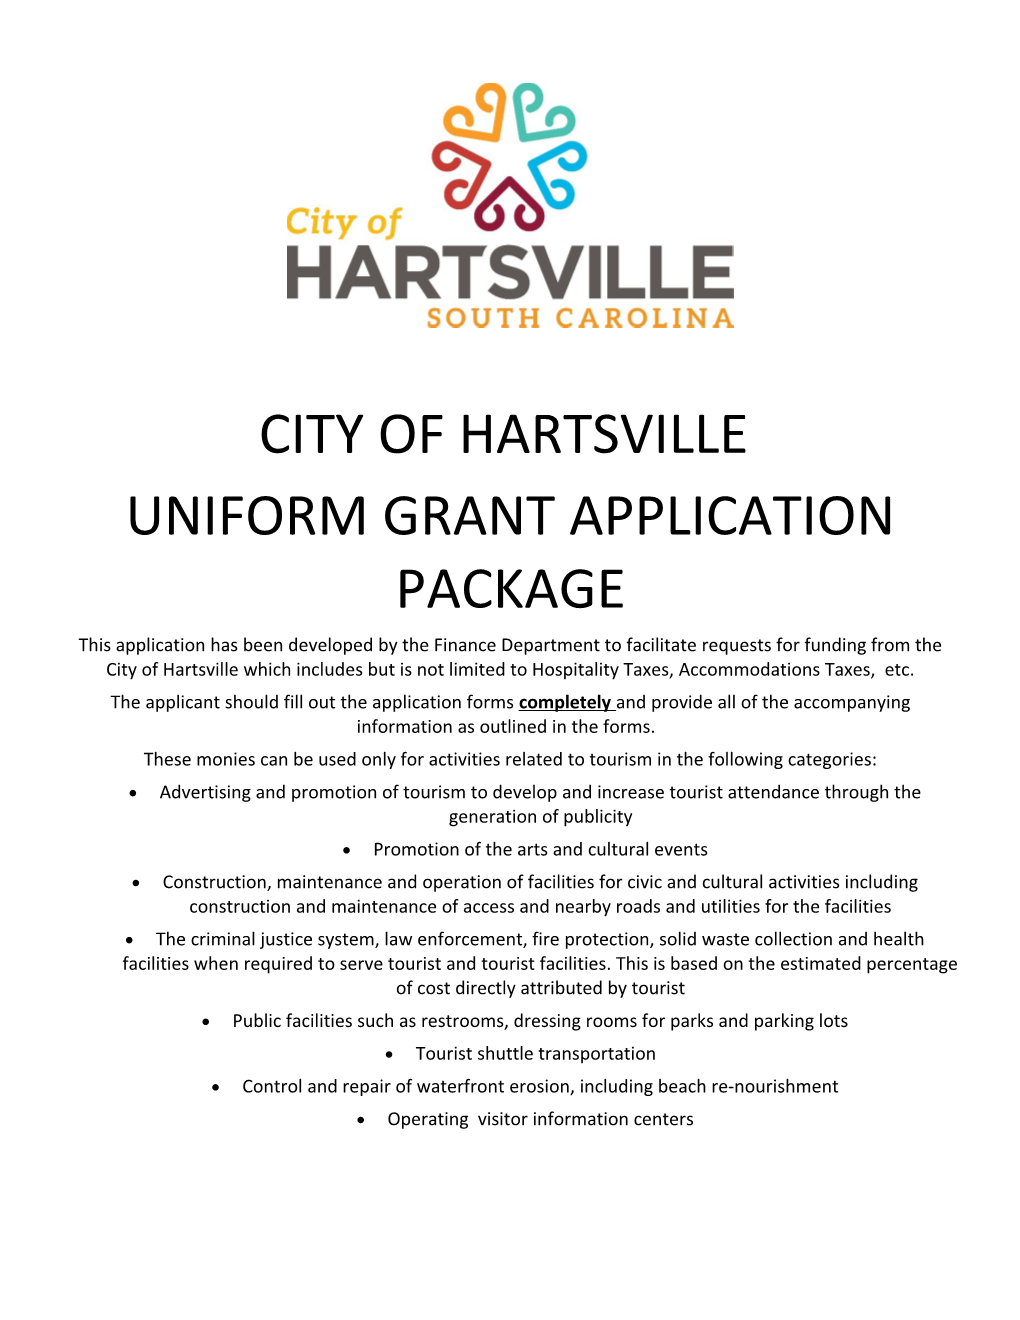 Uniform Grant Application Package